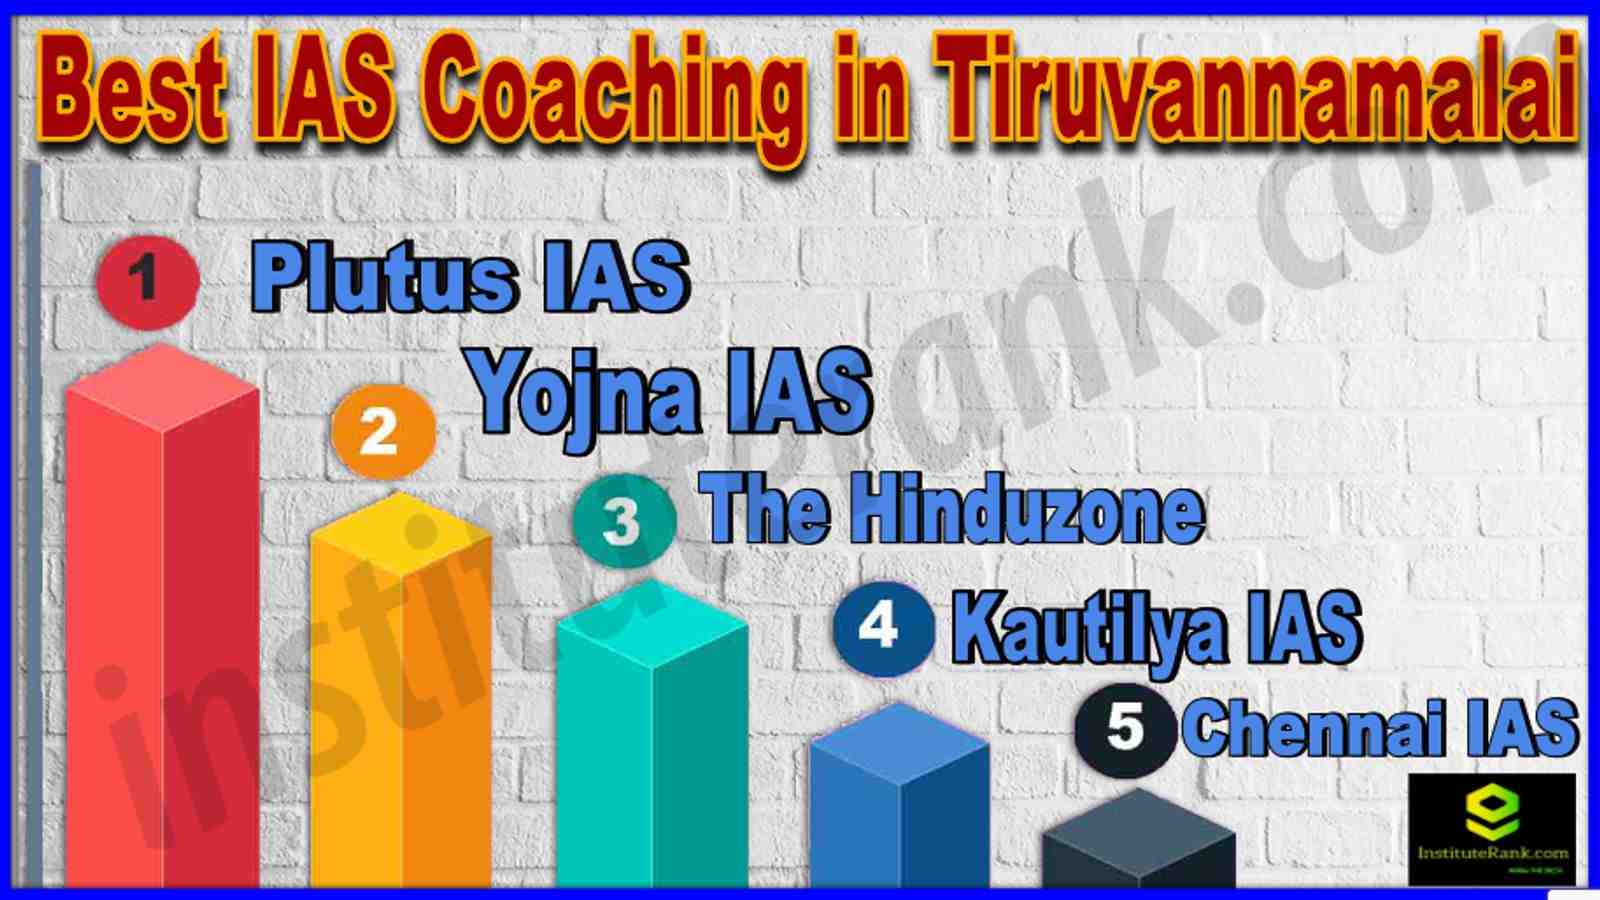 Best IAS Coaching in Tiruvannamalai